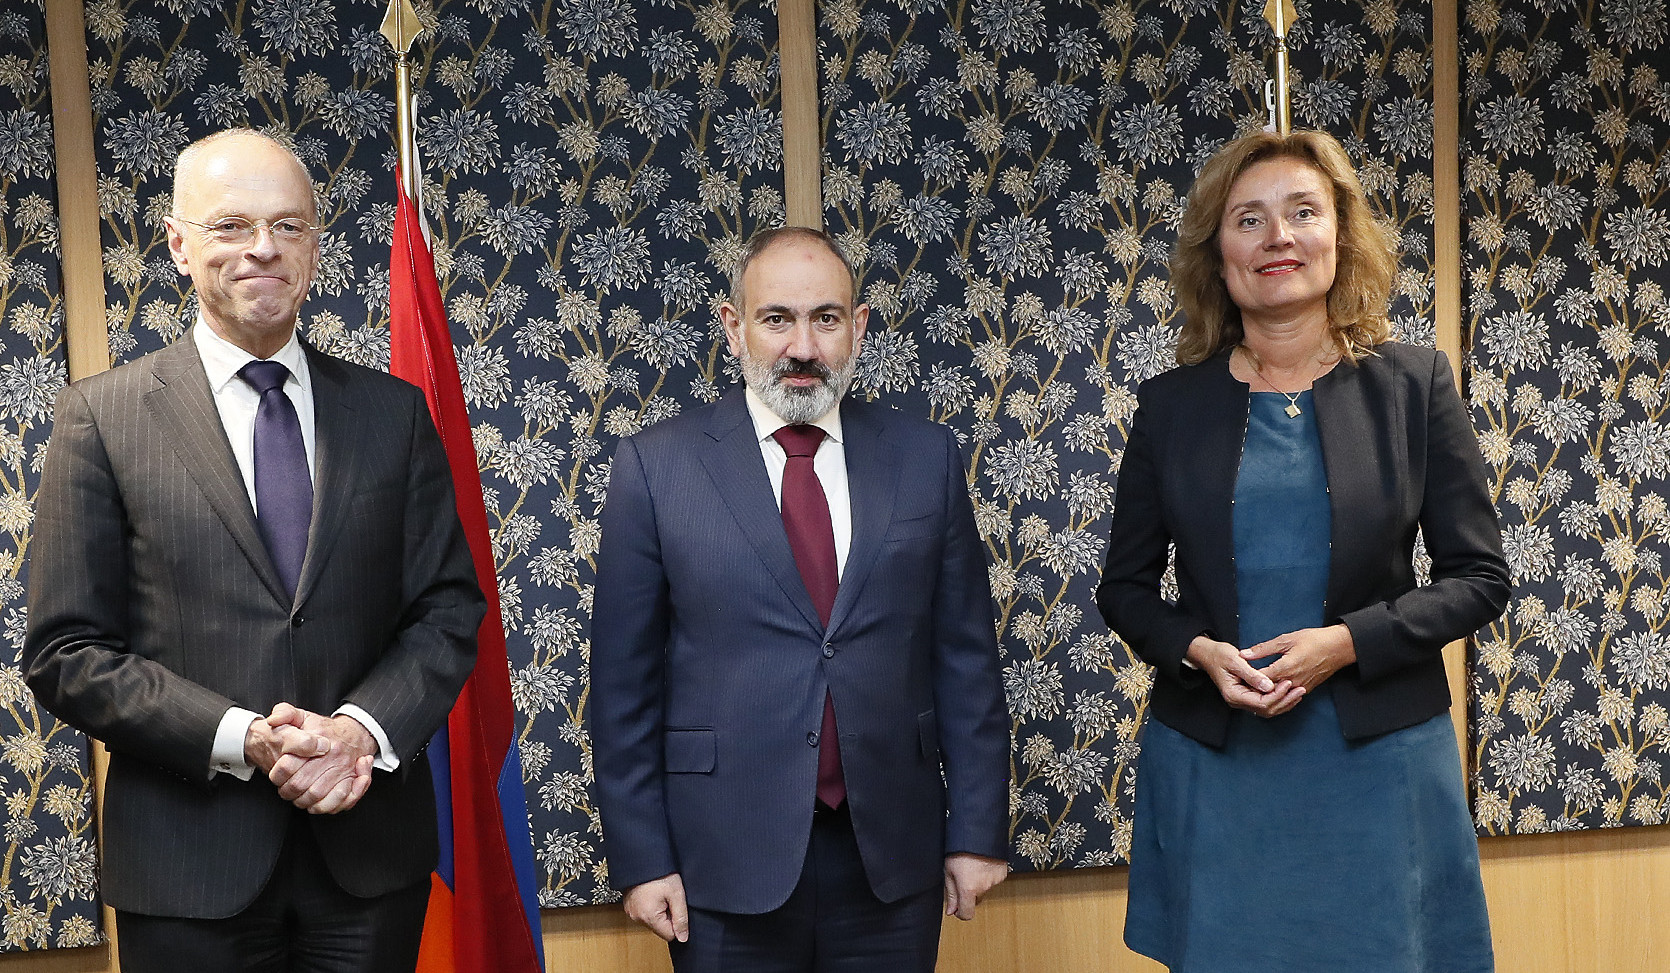 Pashinyan meets with President of Senate of Netherlands Jan Anthonie Bruijn and Speaker of House of Representatives Vera Bergkamp